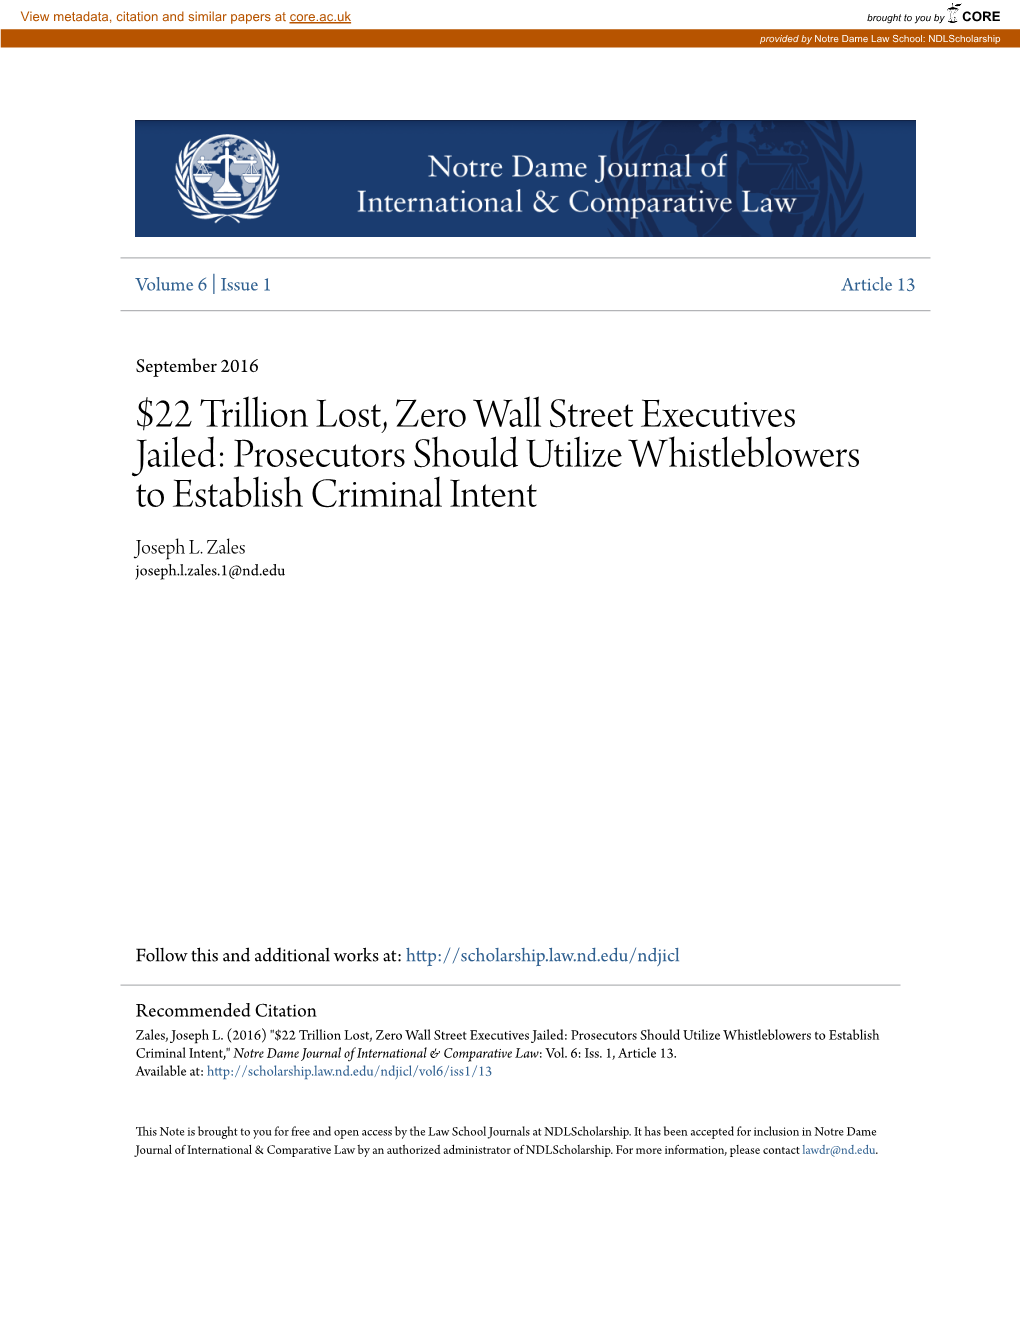 Prosecutors Should Utilize Whistleblowers to Establish Criminal Intent Joseph L